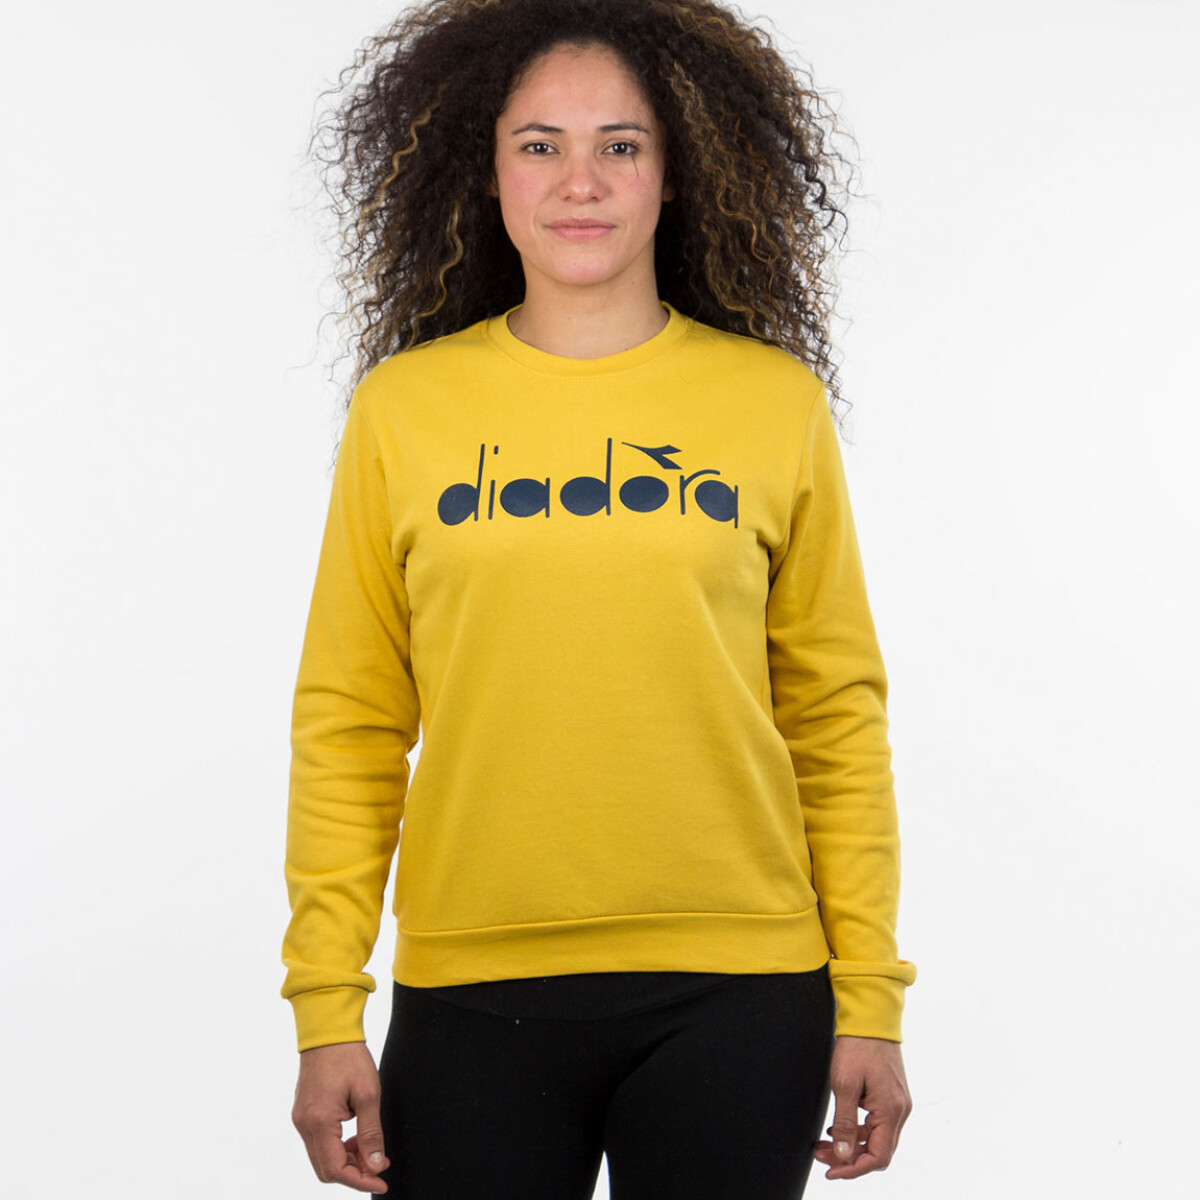 Diadora Buzo Ladies Crew Neck Sweater With Print Mustard - Mostaza 